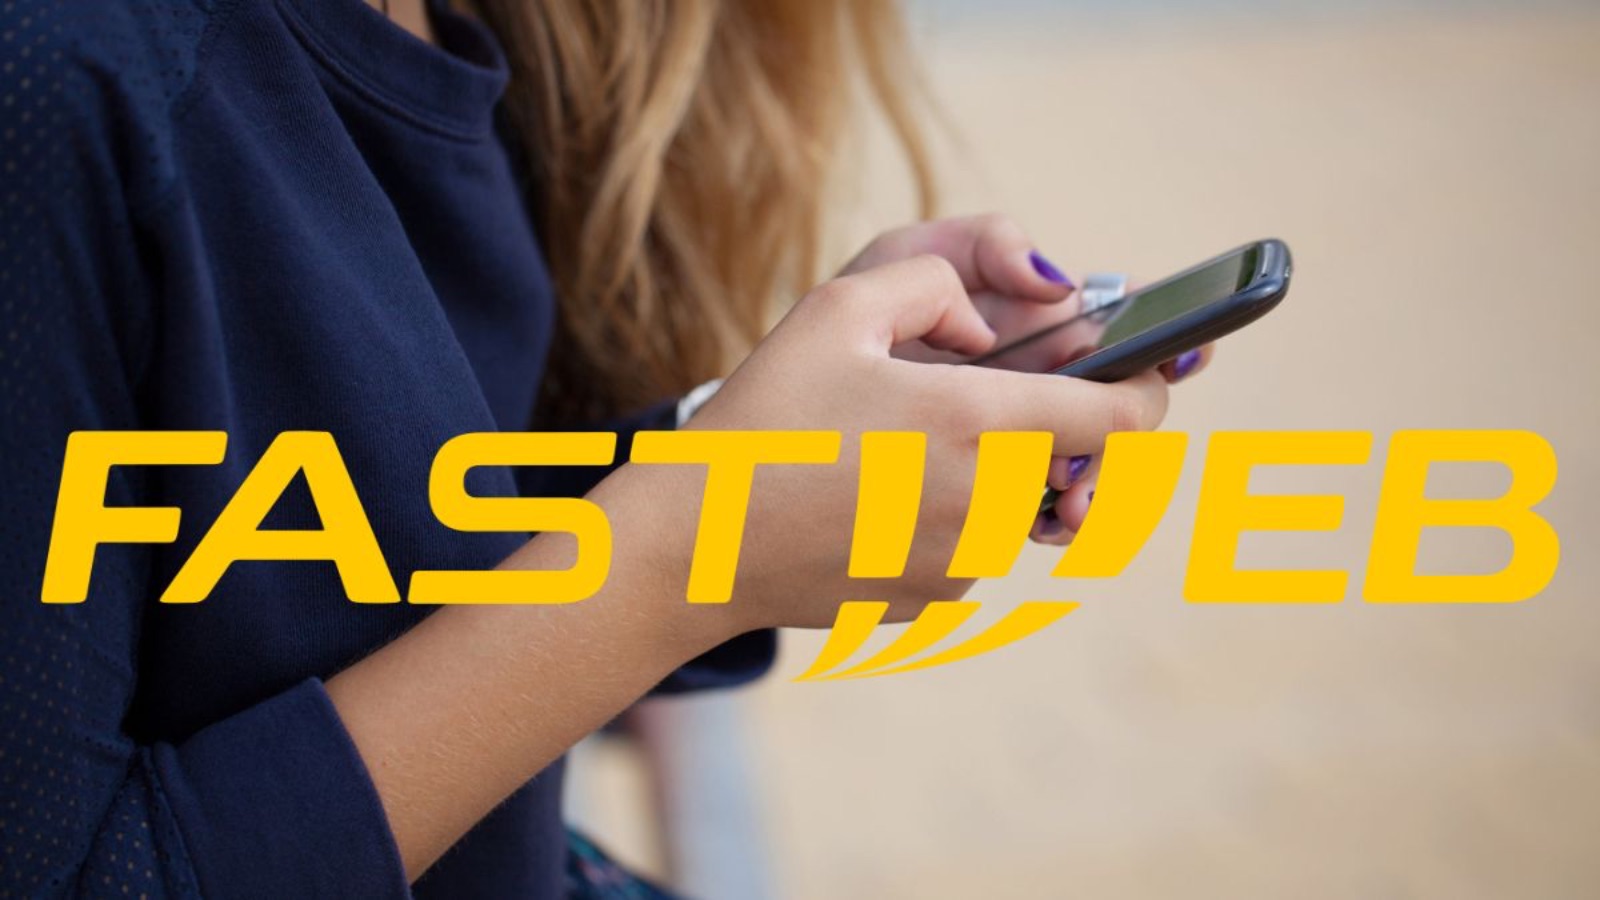 Fastweb, offerta INCREDIBILE con 3 MESI gratis e 150 GB